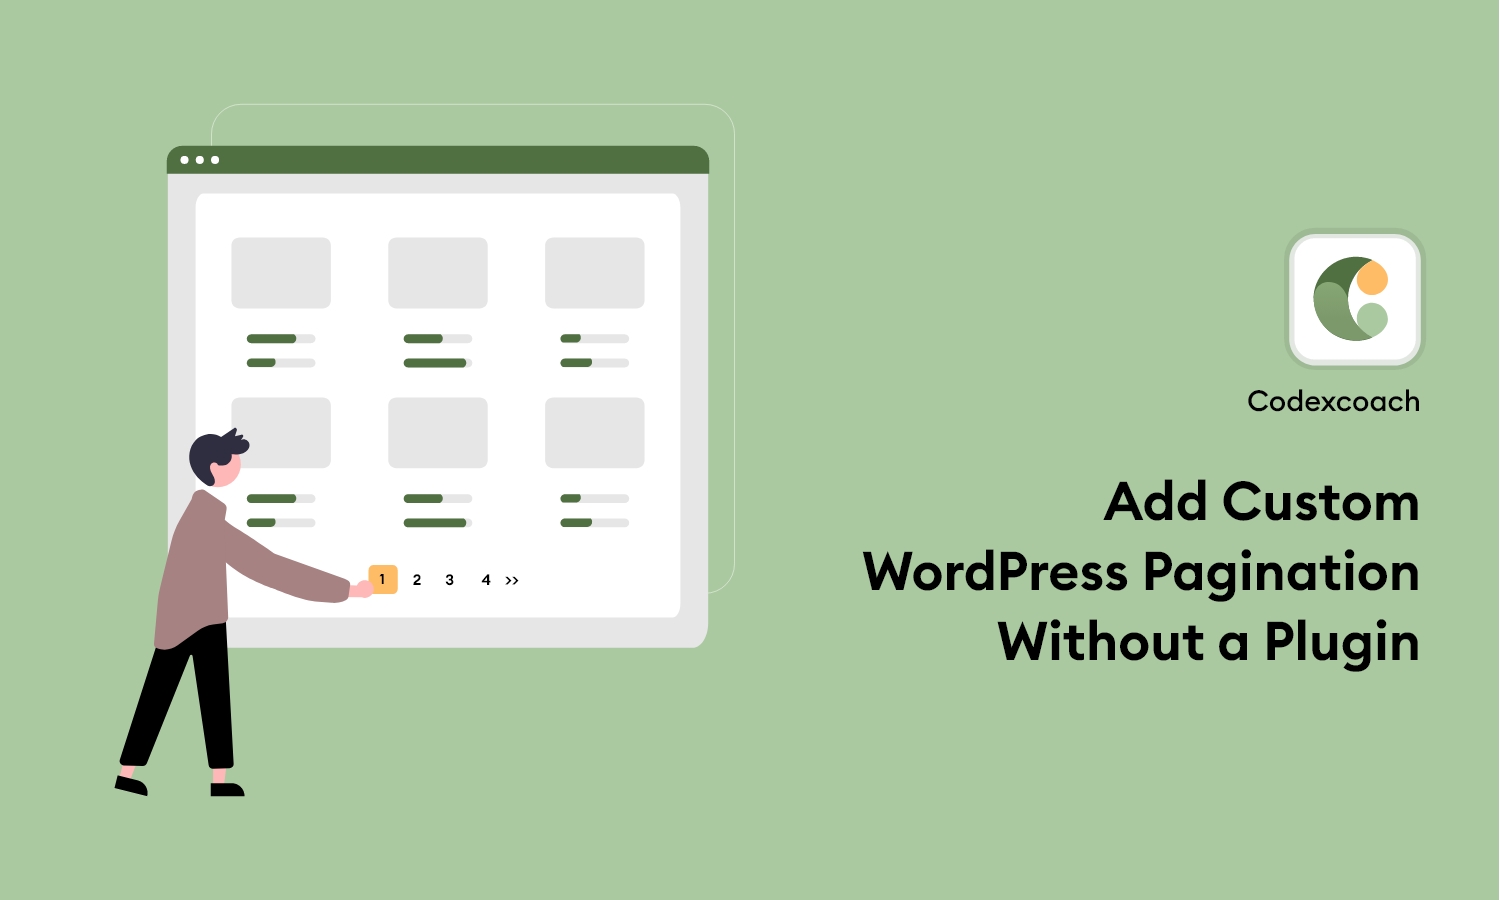 Add Custom WordPress Pagination Without a Plugin